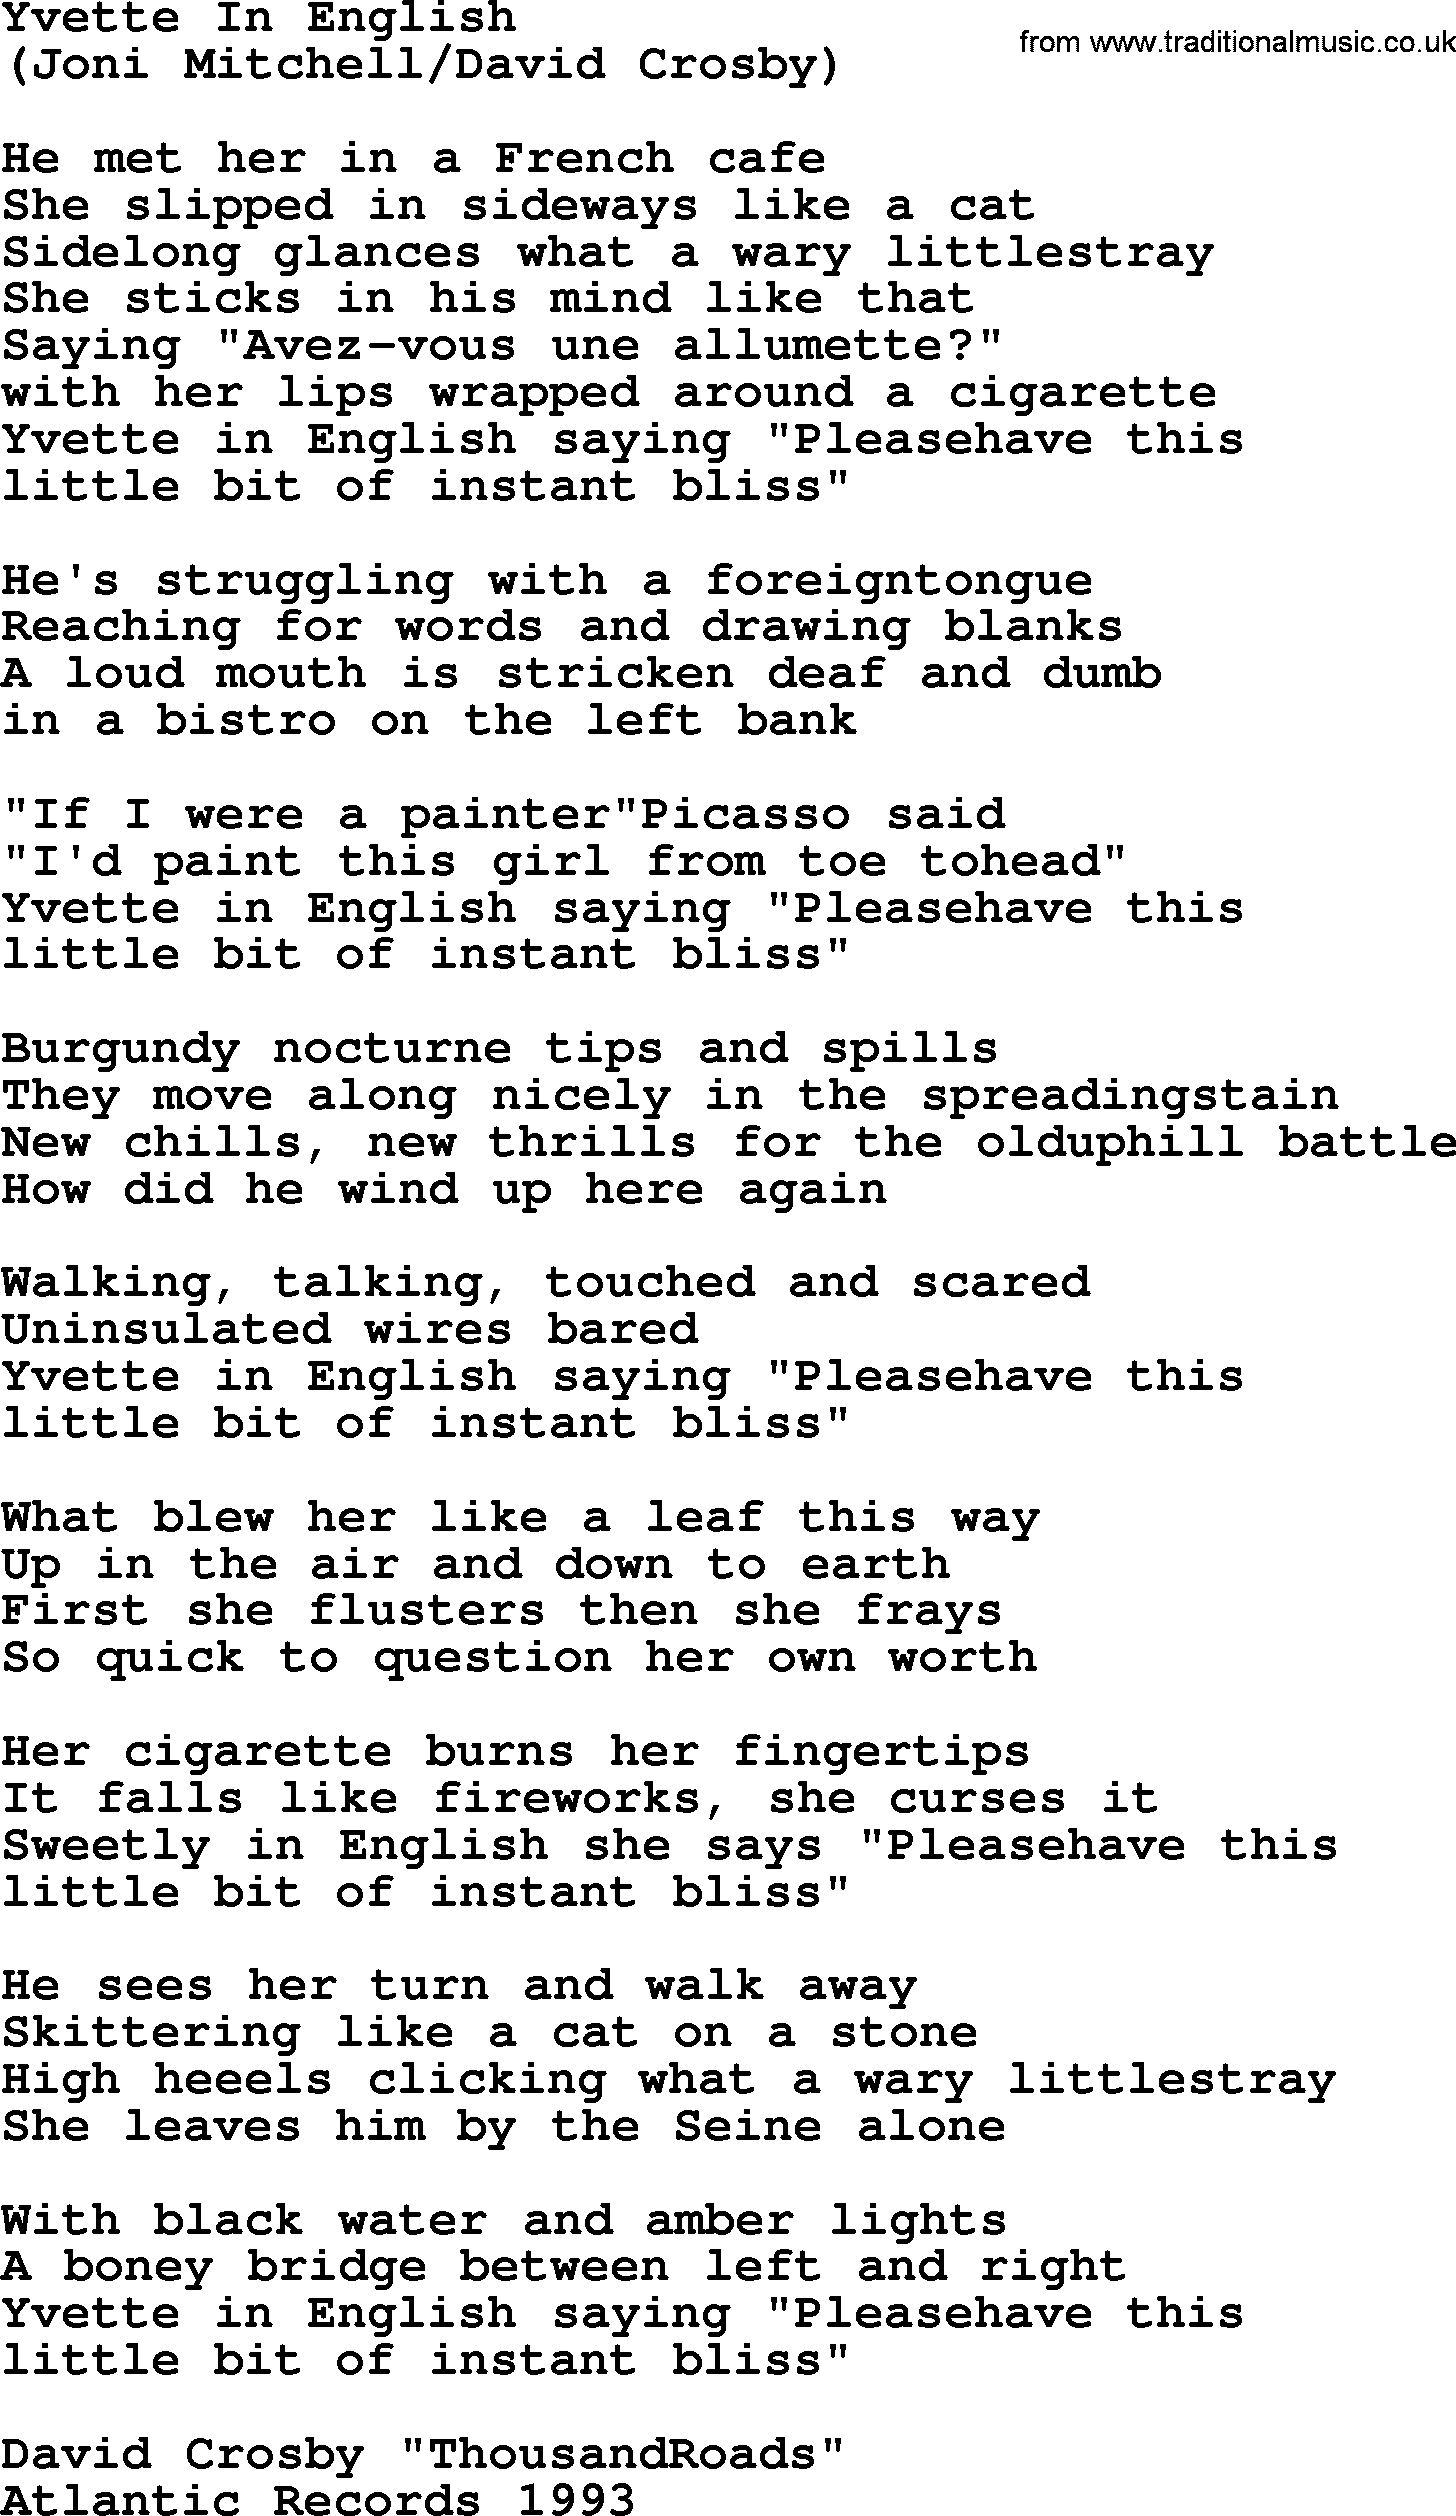 The Byrds song Yvette In English, lyrics